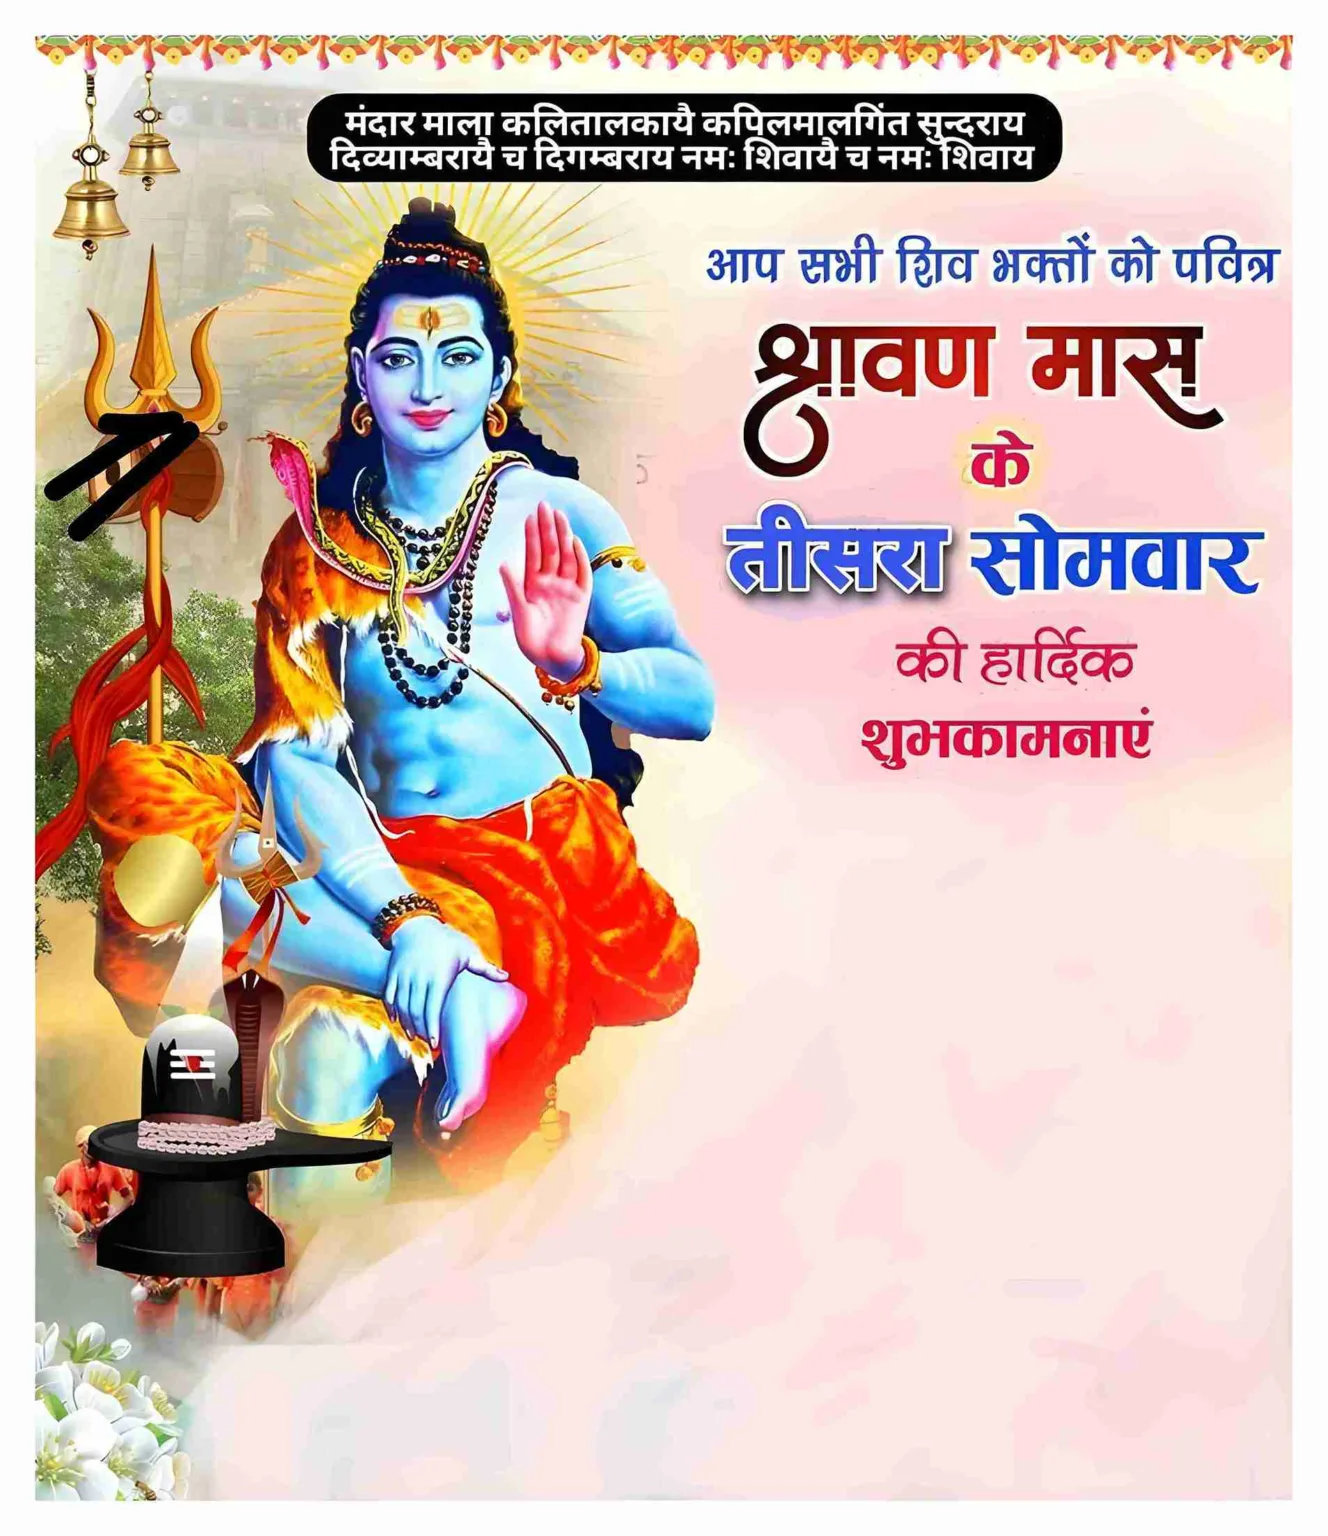 Maha Shivratri wishes banner background